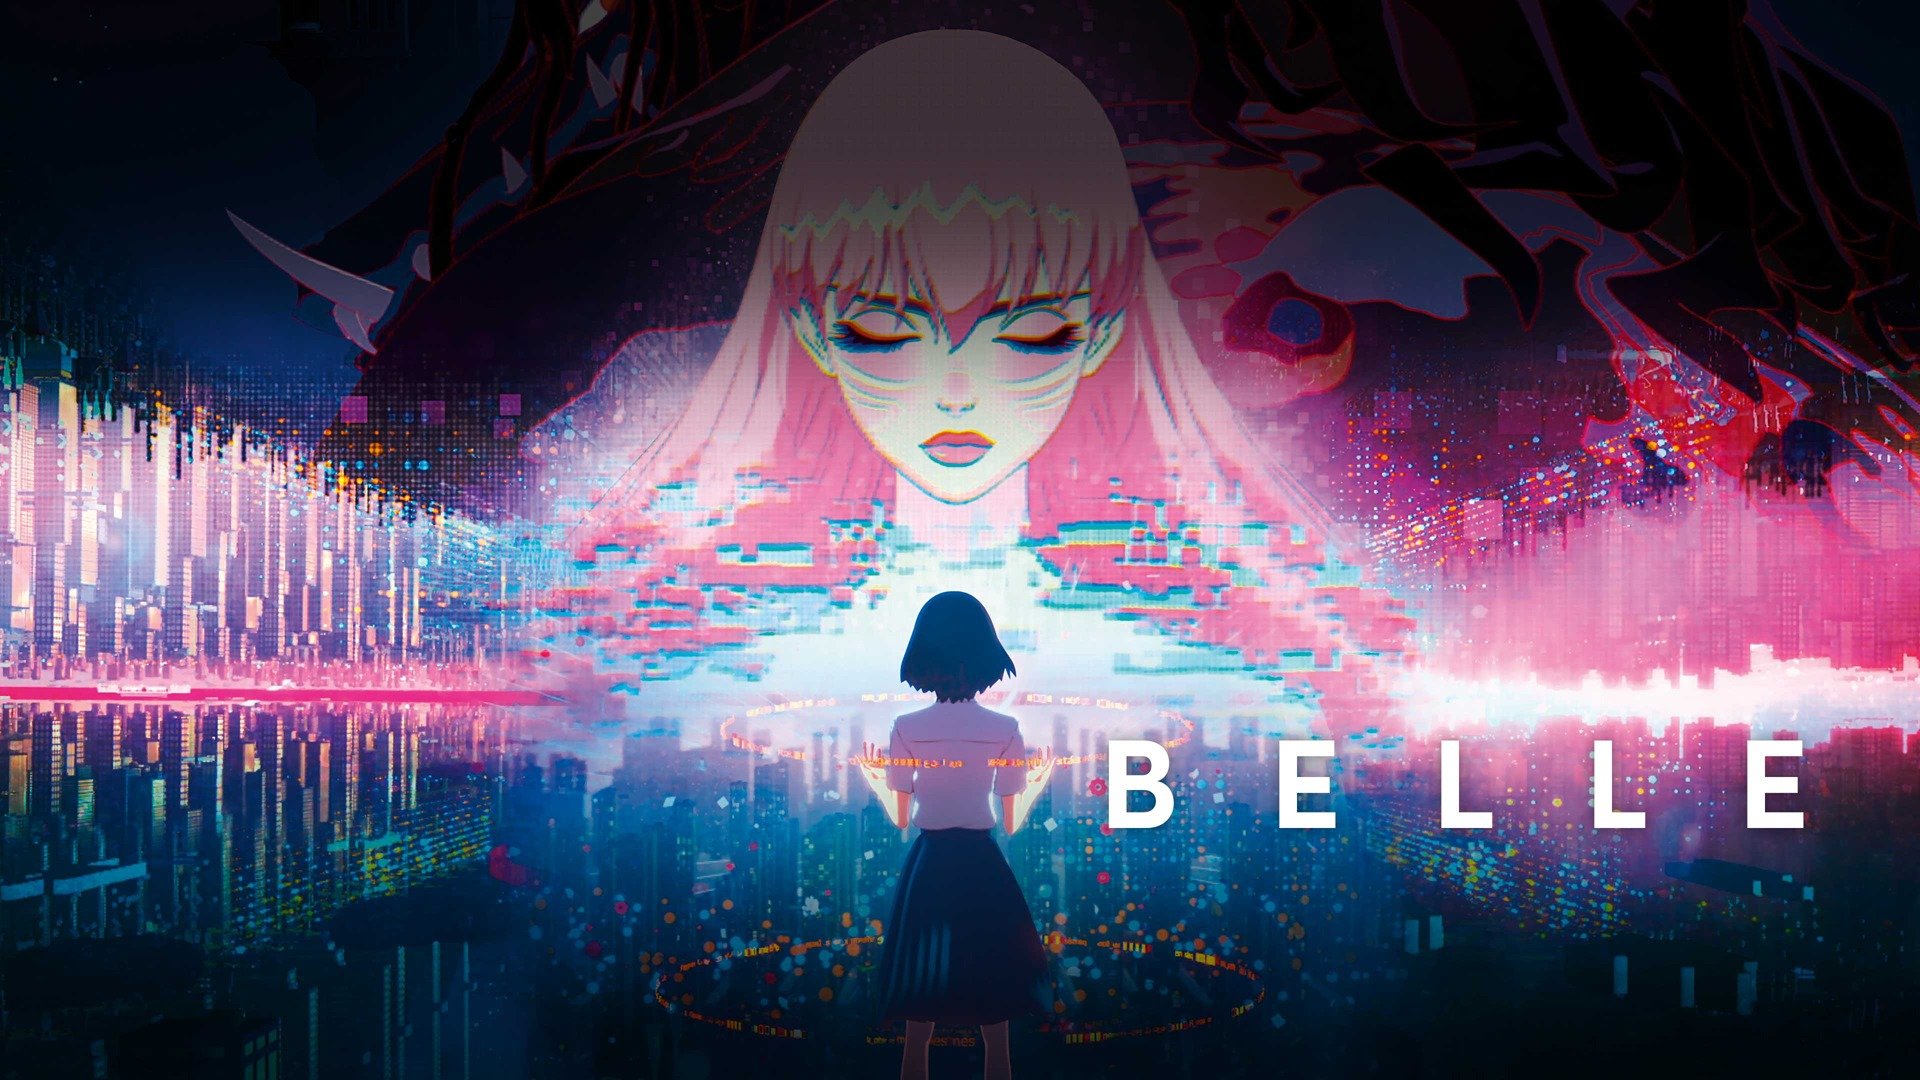 BELLE - Mamoru Hosoda and Studio Chizu [Official Subtitled Teaser Trailer]  - YouTube